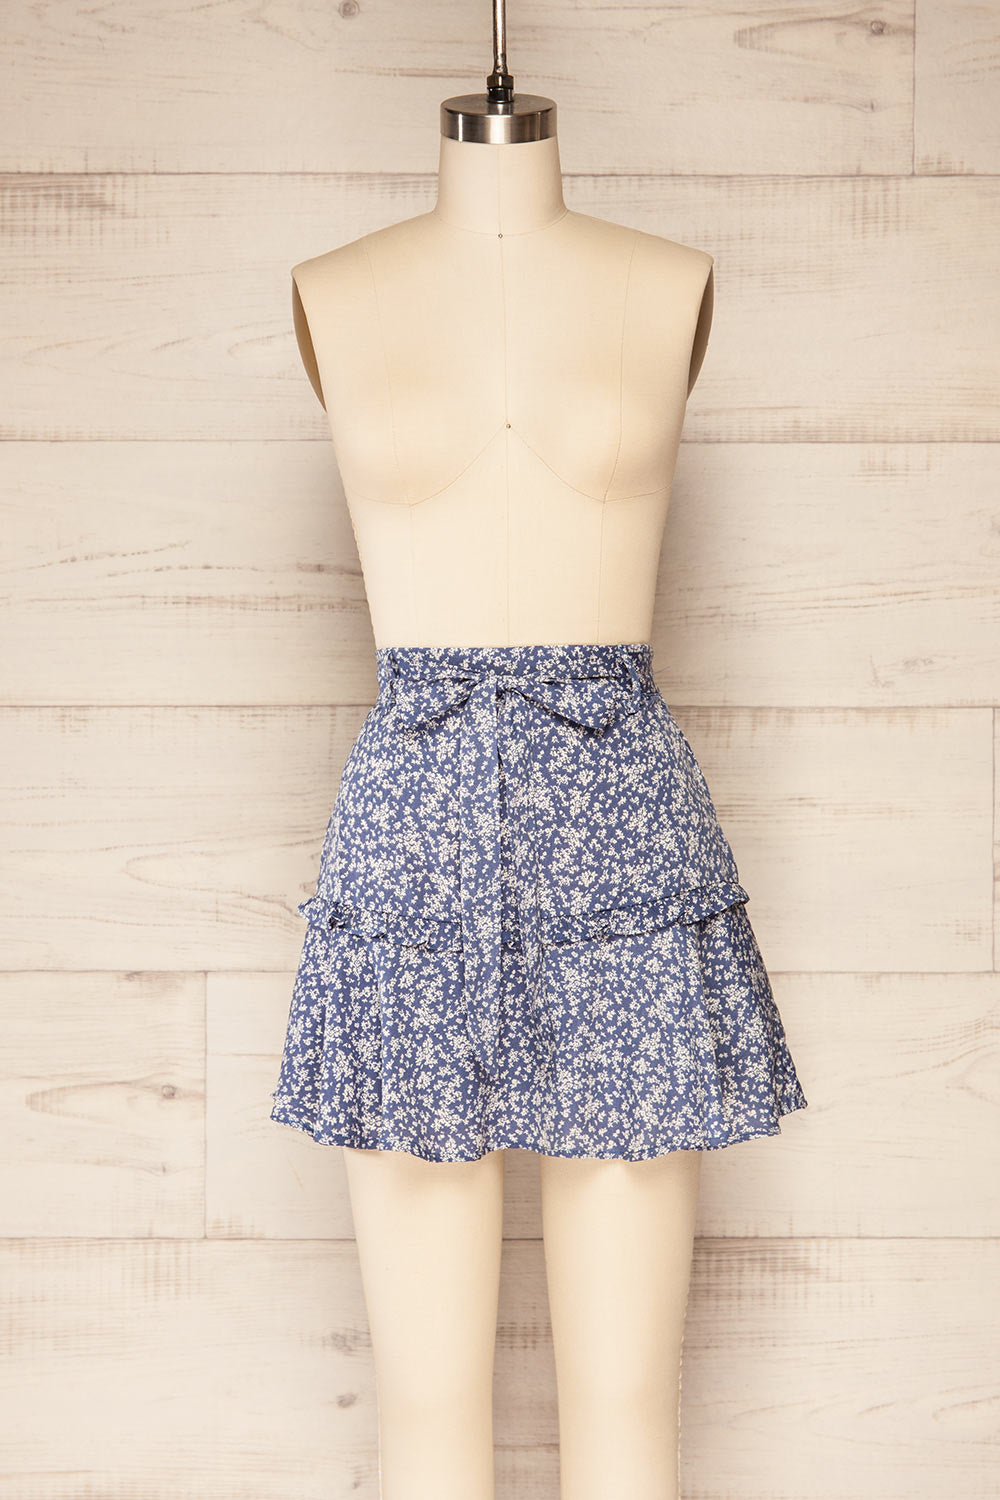 Dappel Blue Floral Skort w/ Ruffles & Fabric Belt | La petite garçonne front view 